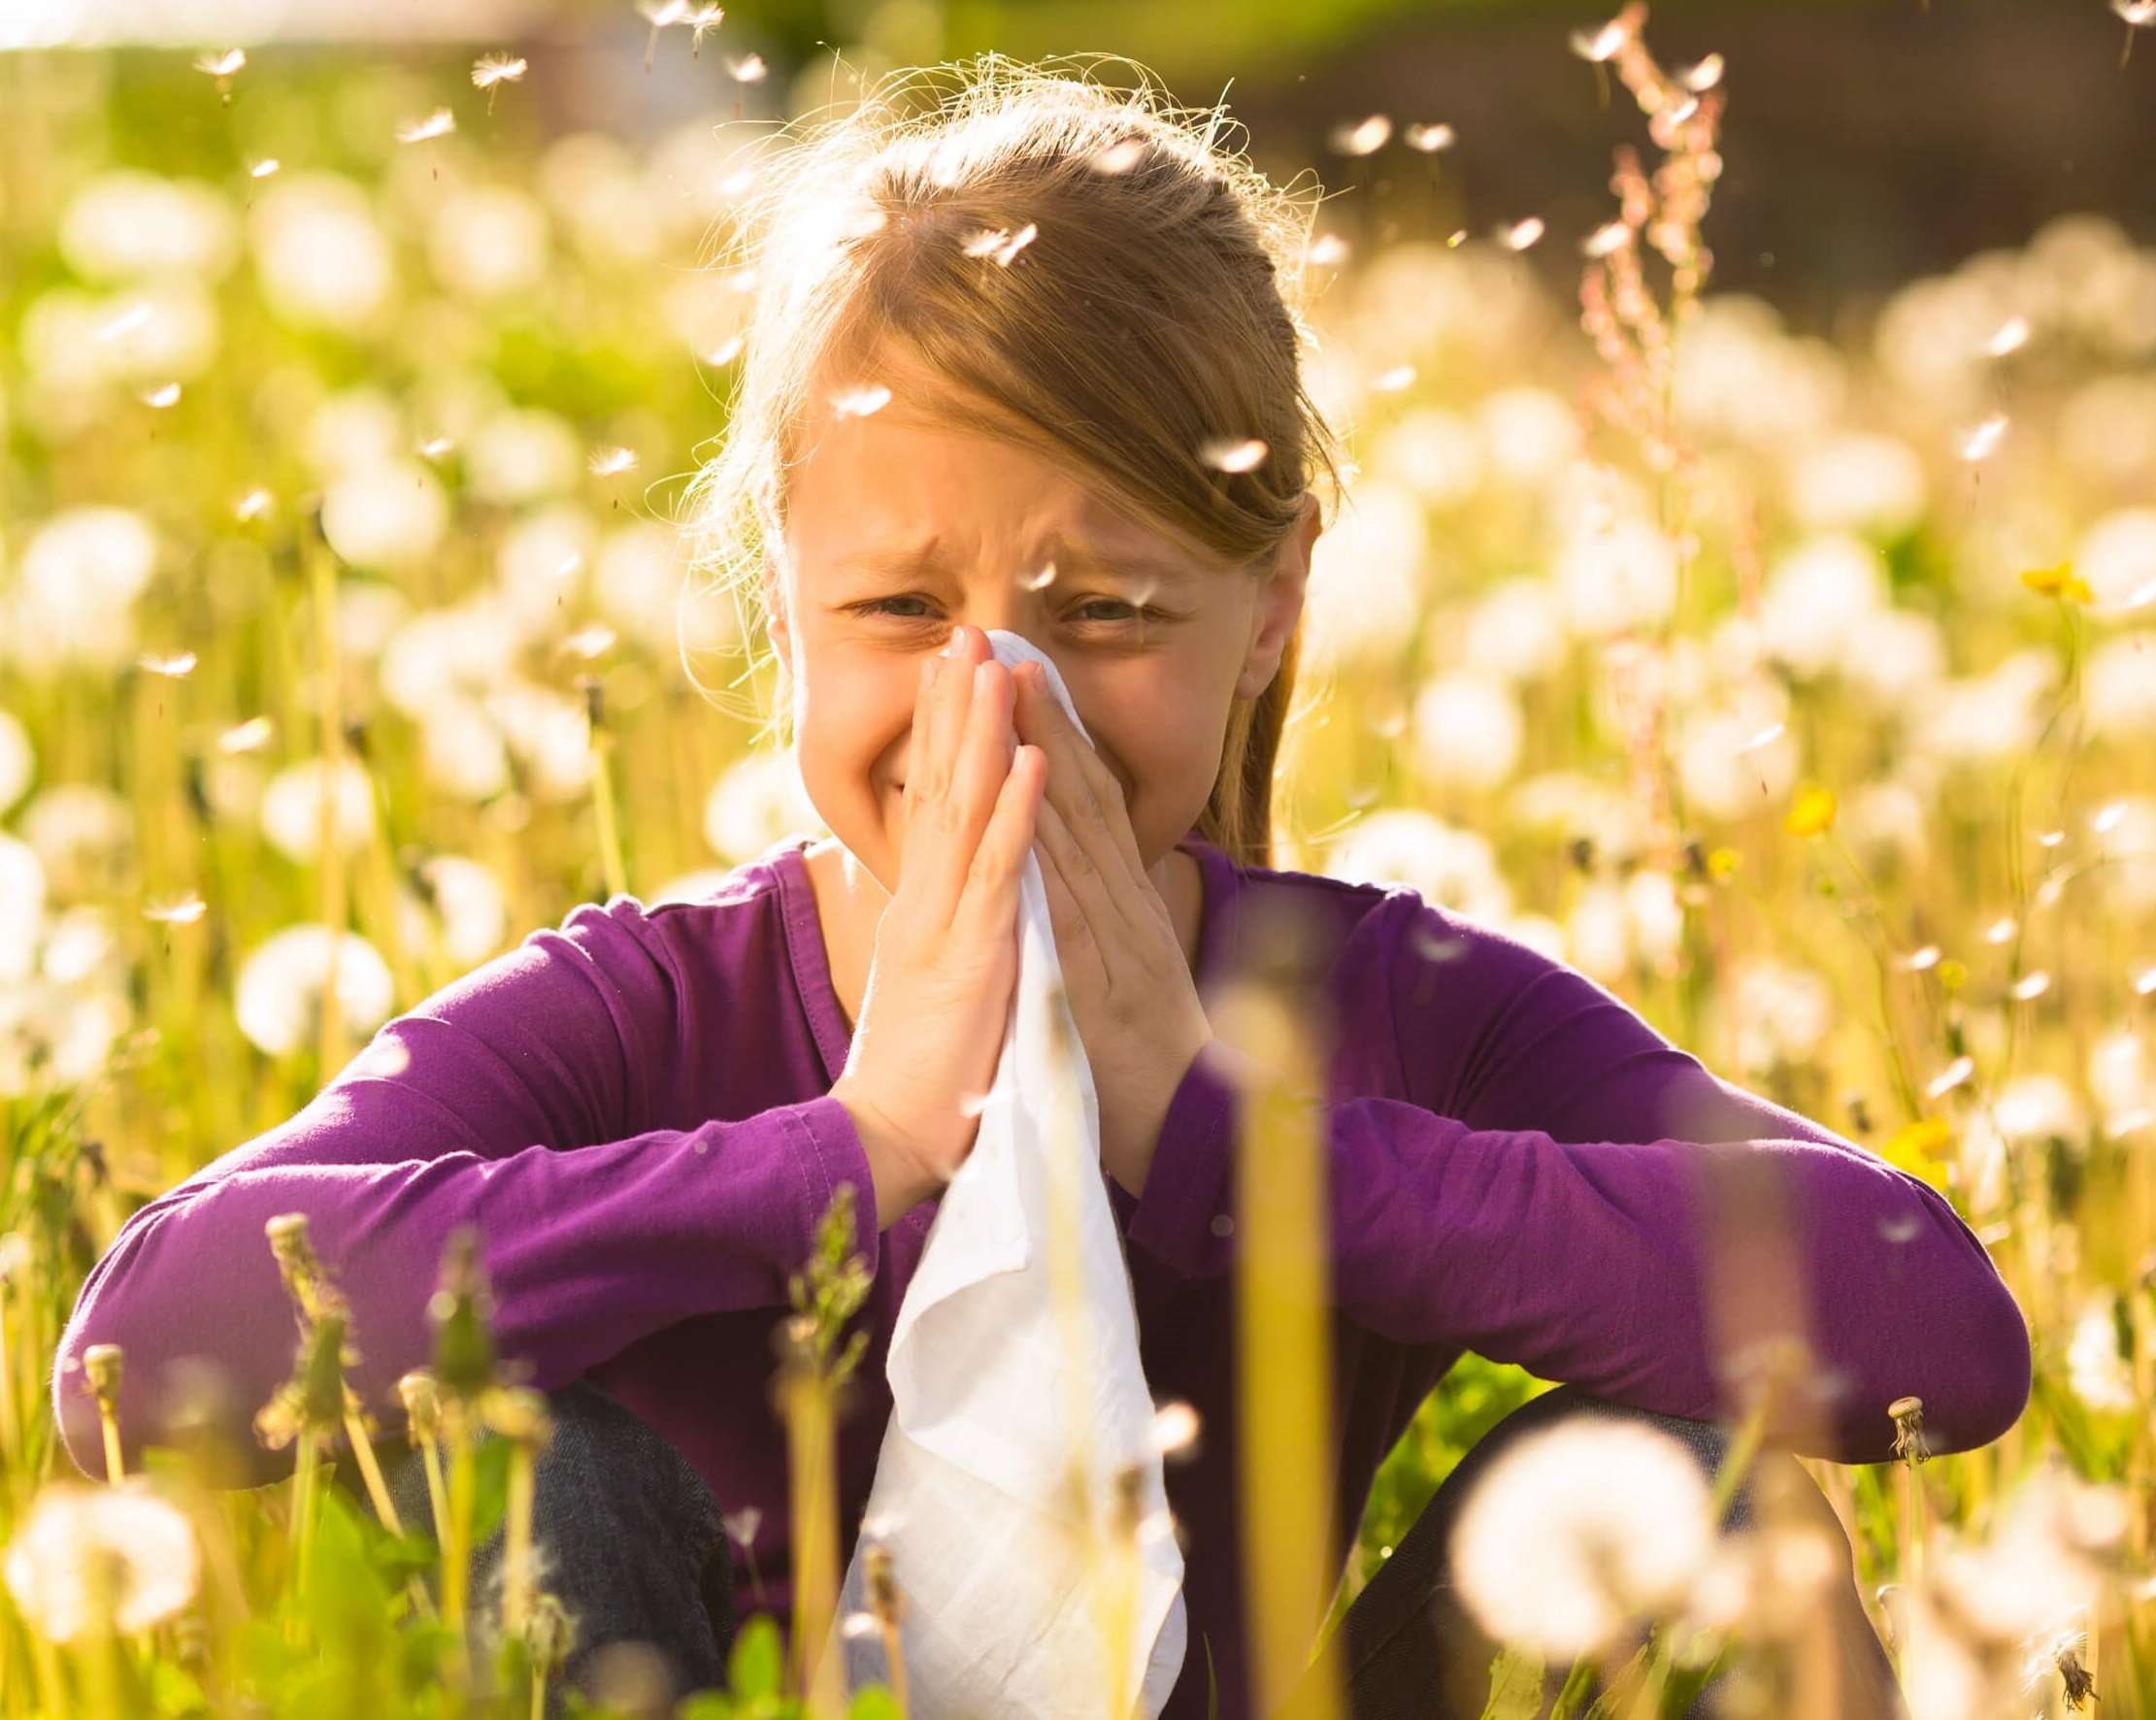 Antronex Allergens For Seasonal Allergies